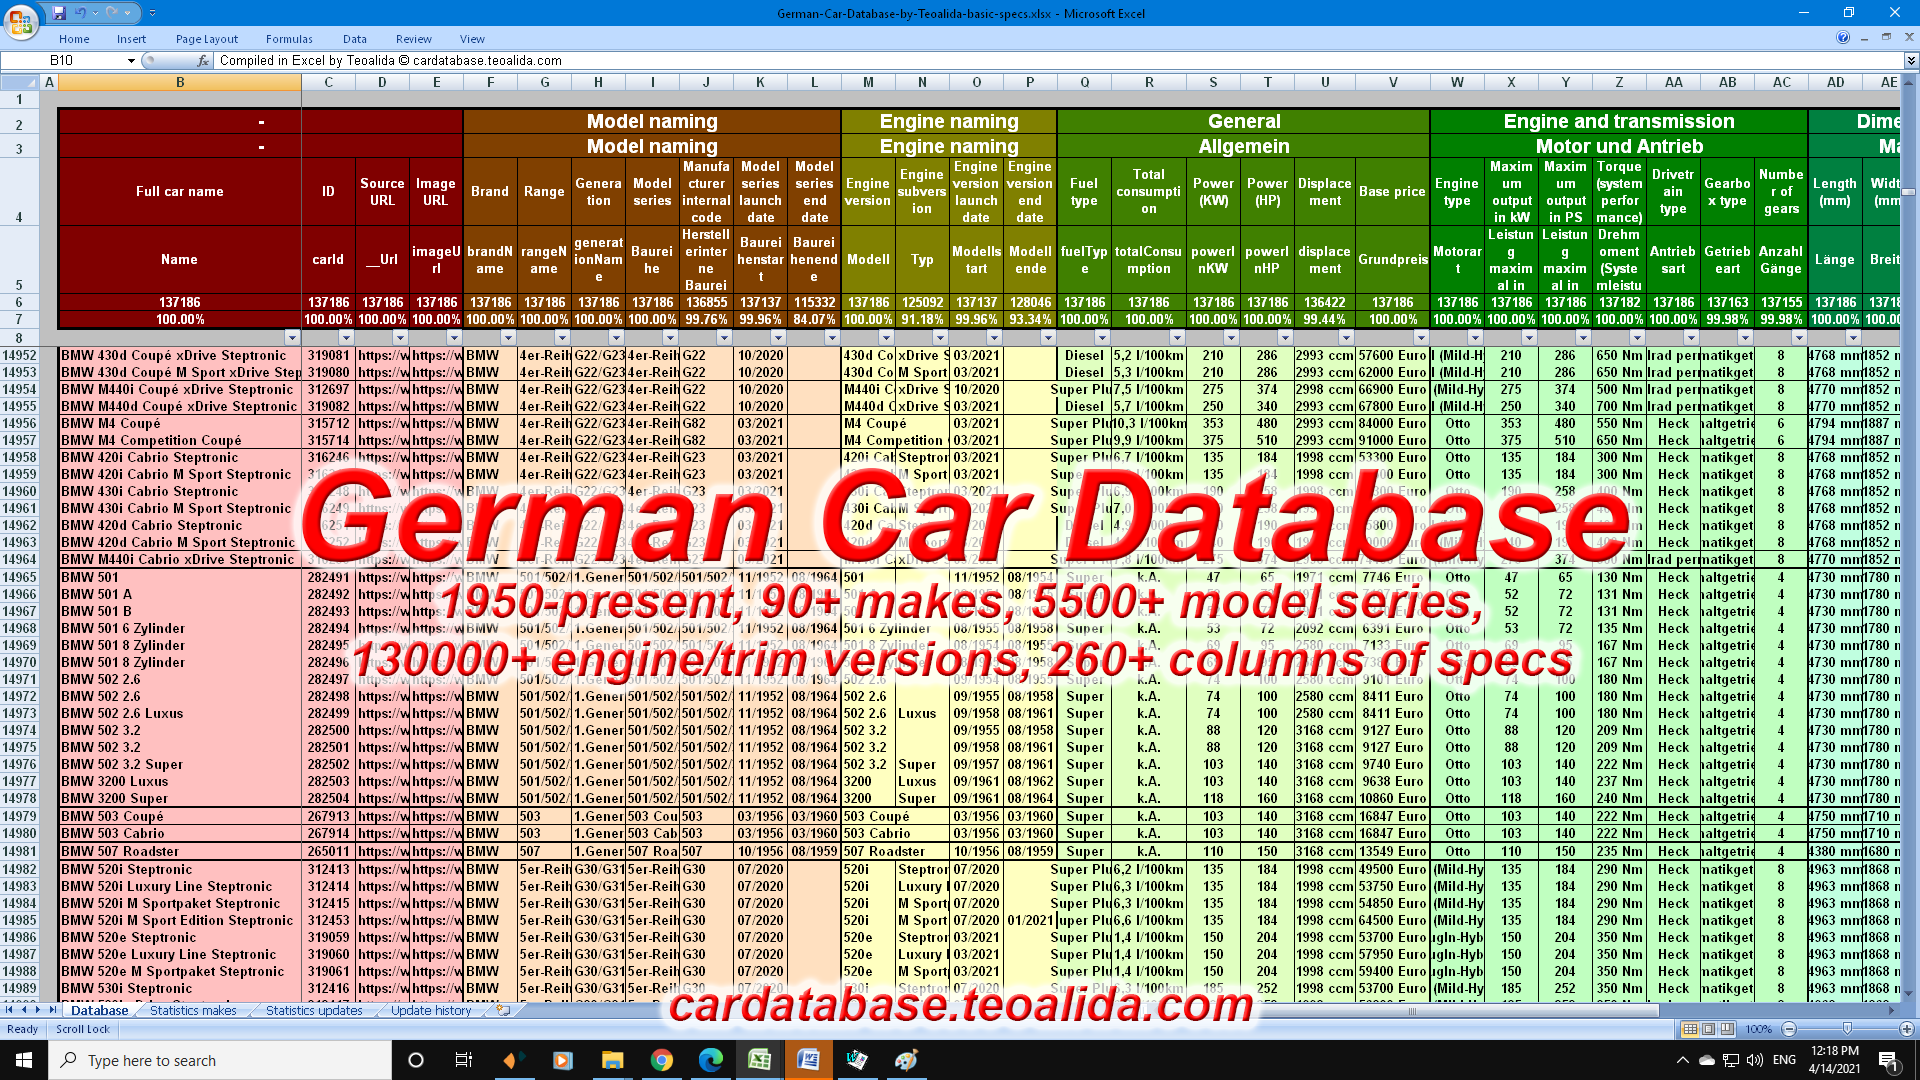 German car database